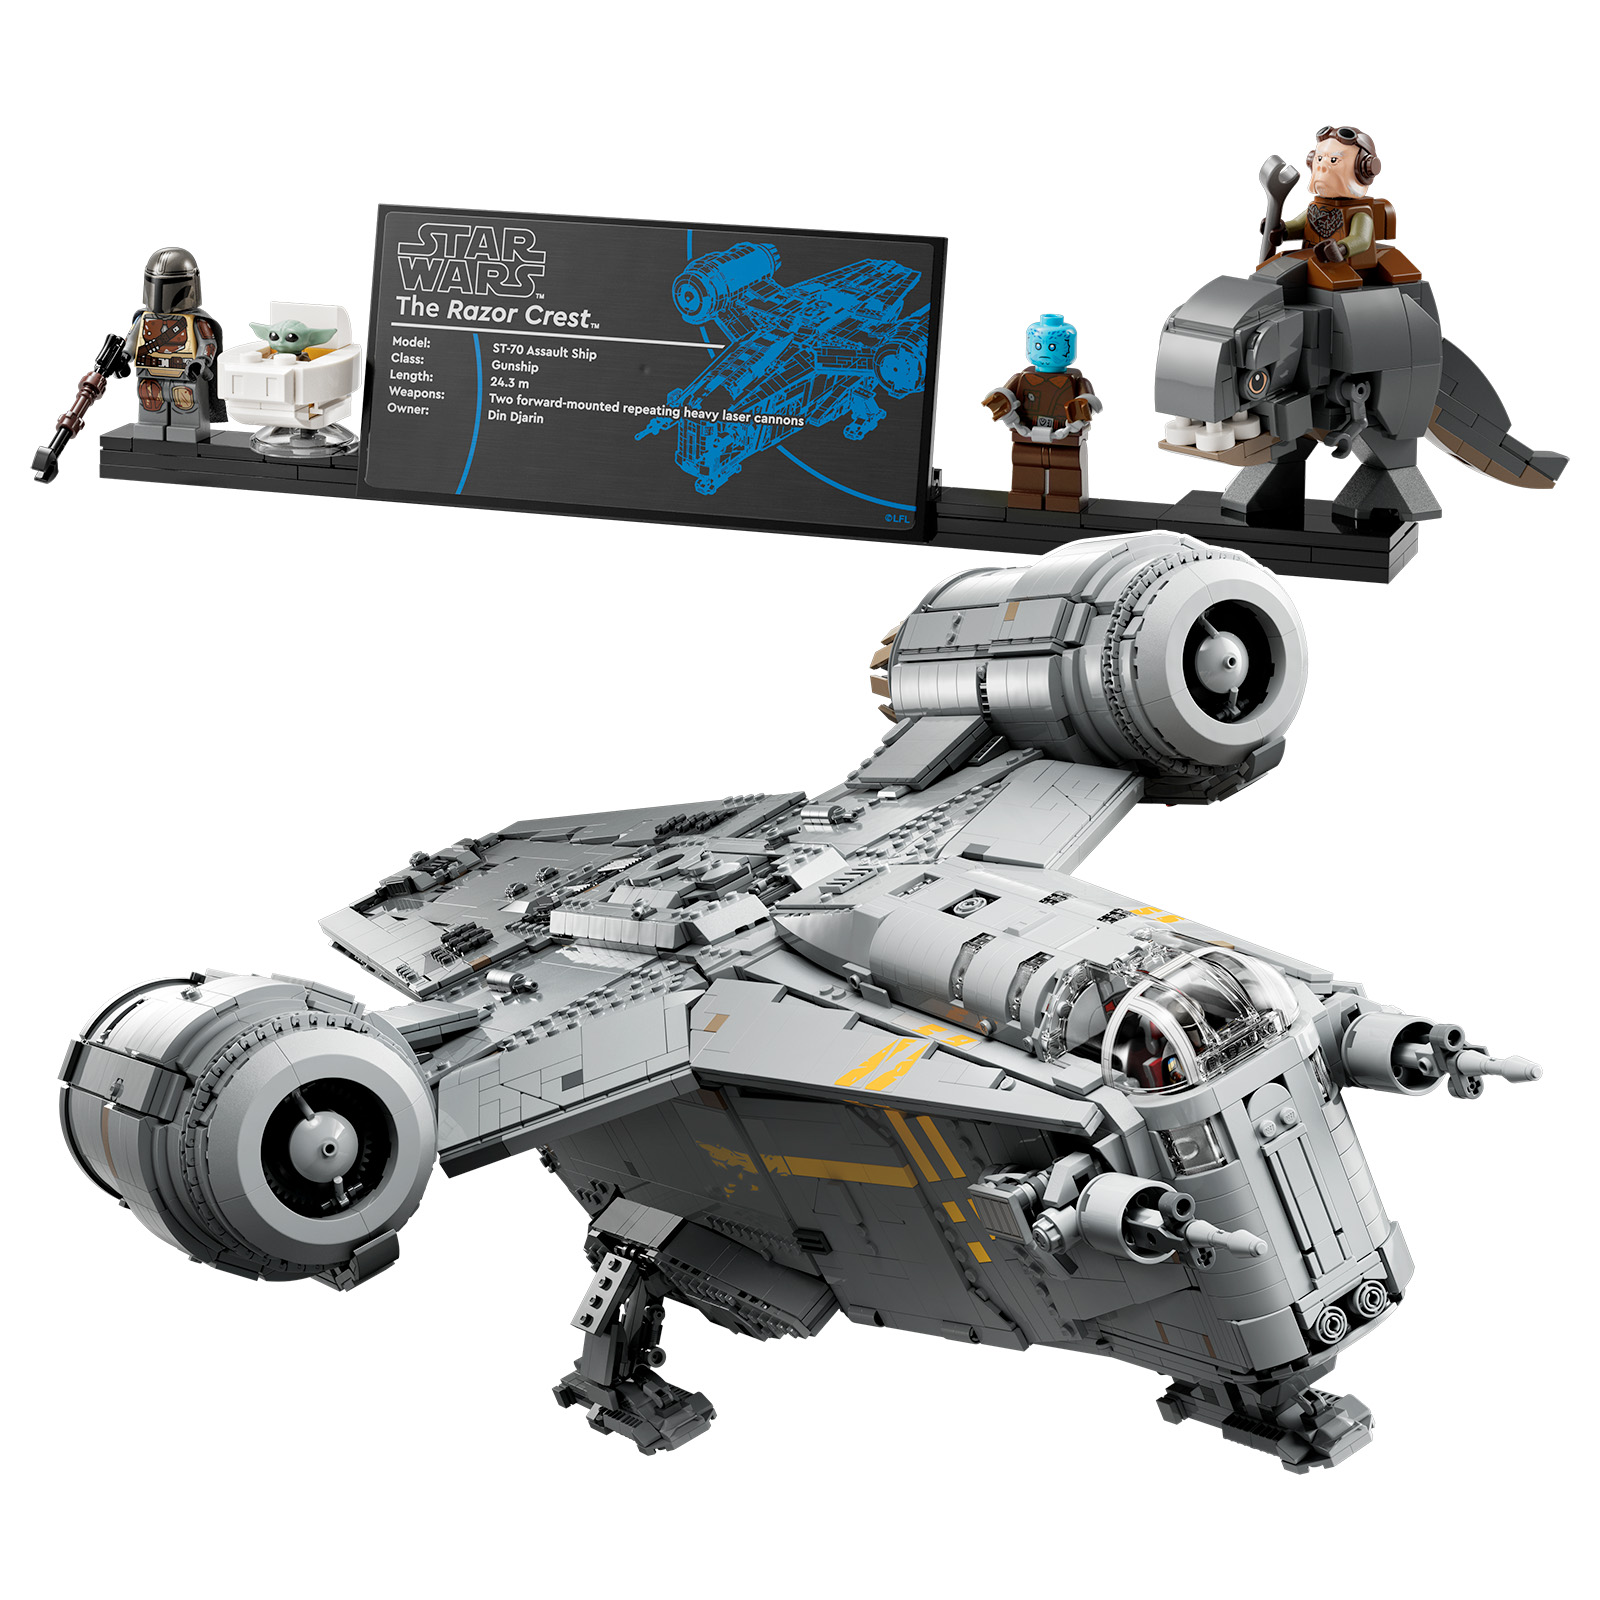 Наборы LEGO Star Wars Ultimate Collector Series: планшеты для презентаций скоро будут напечатаны тампопечатью